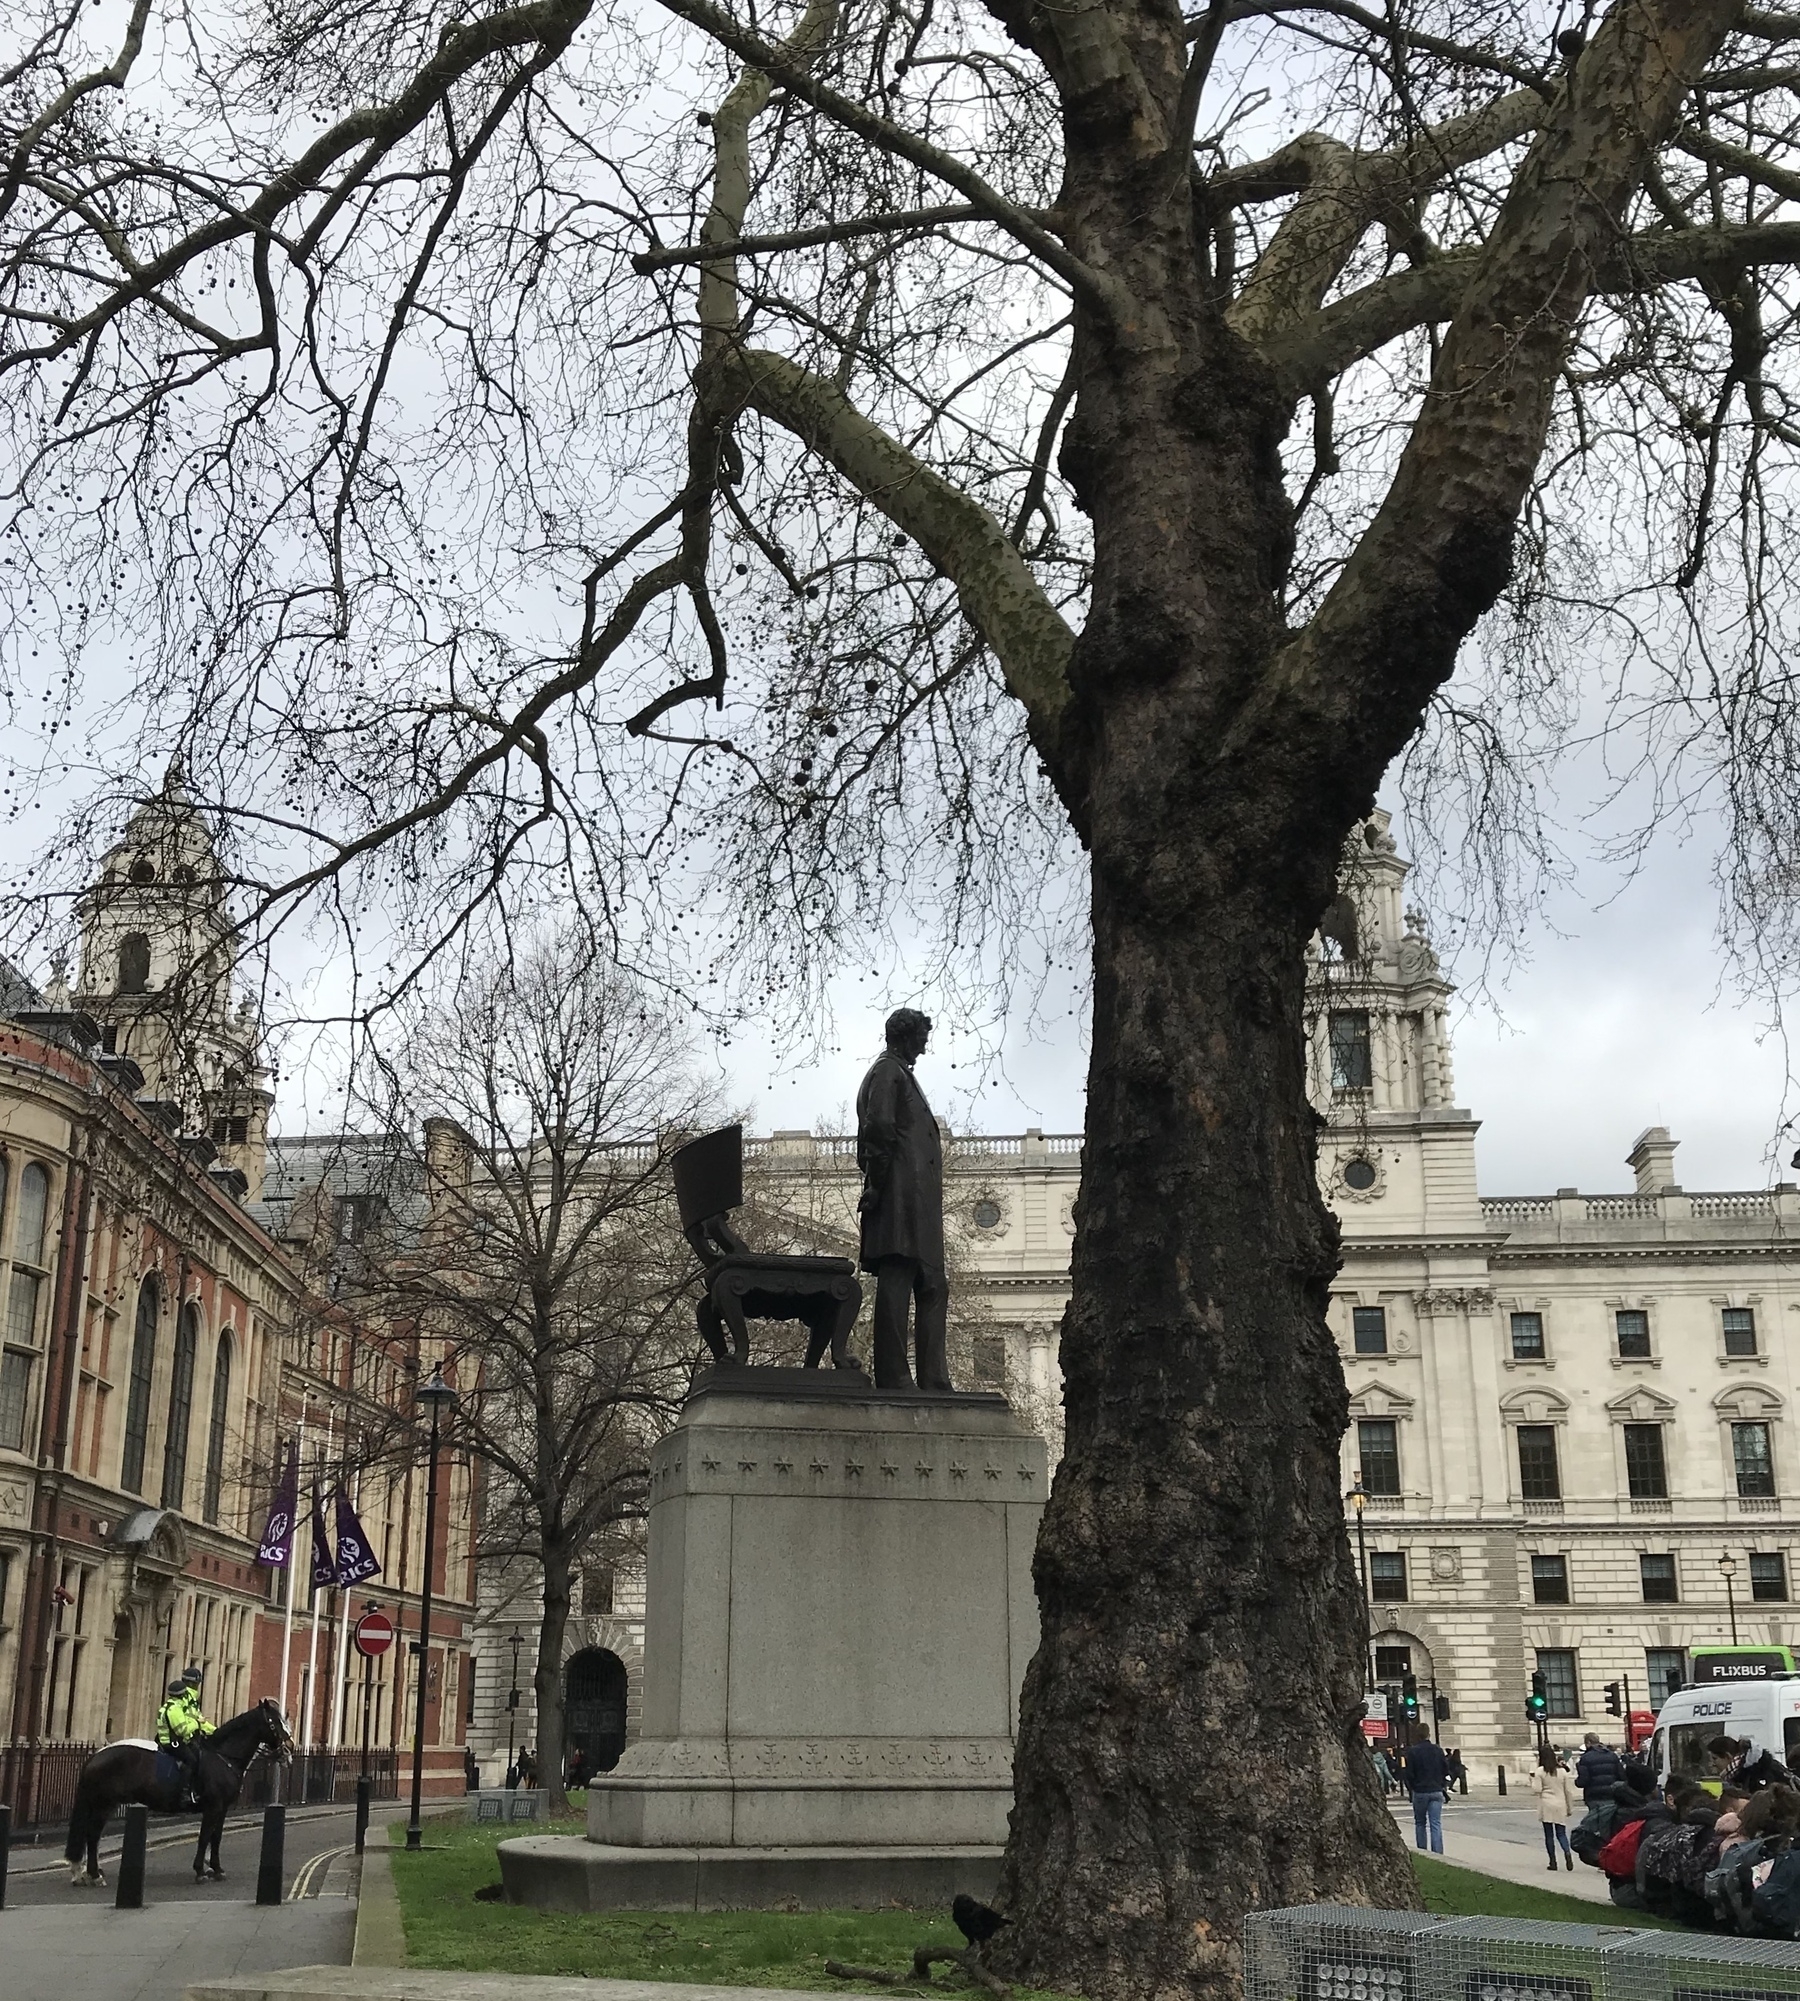 Statue of Abraham Lincoln in Parliament Square